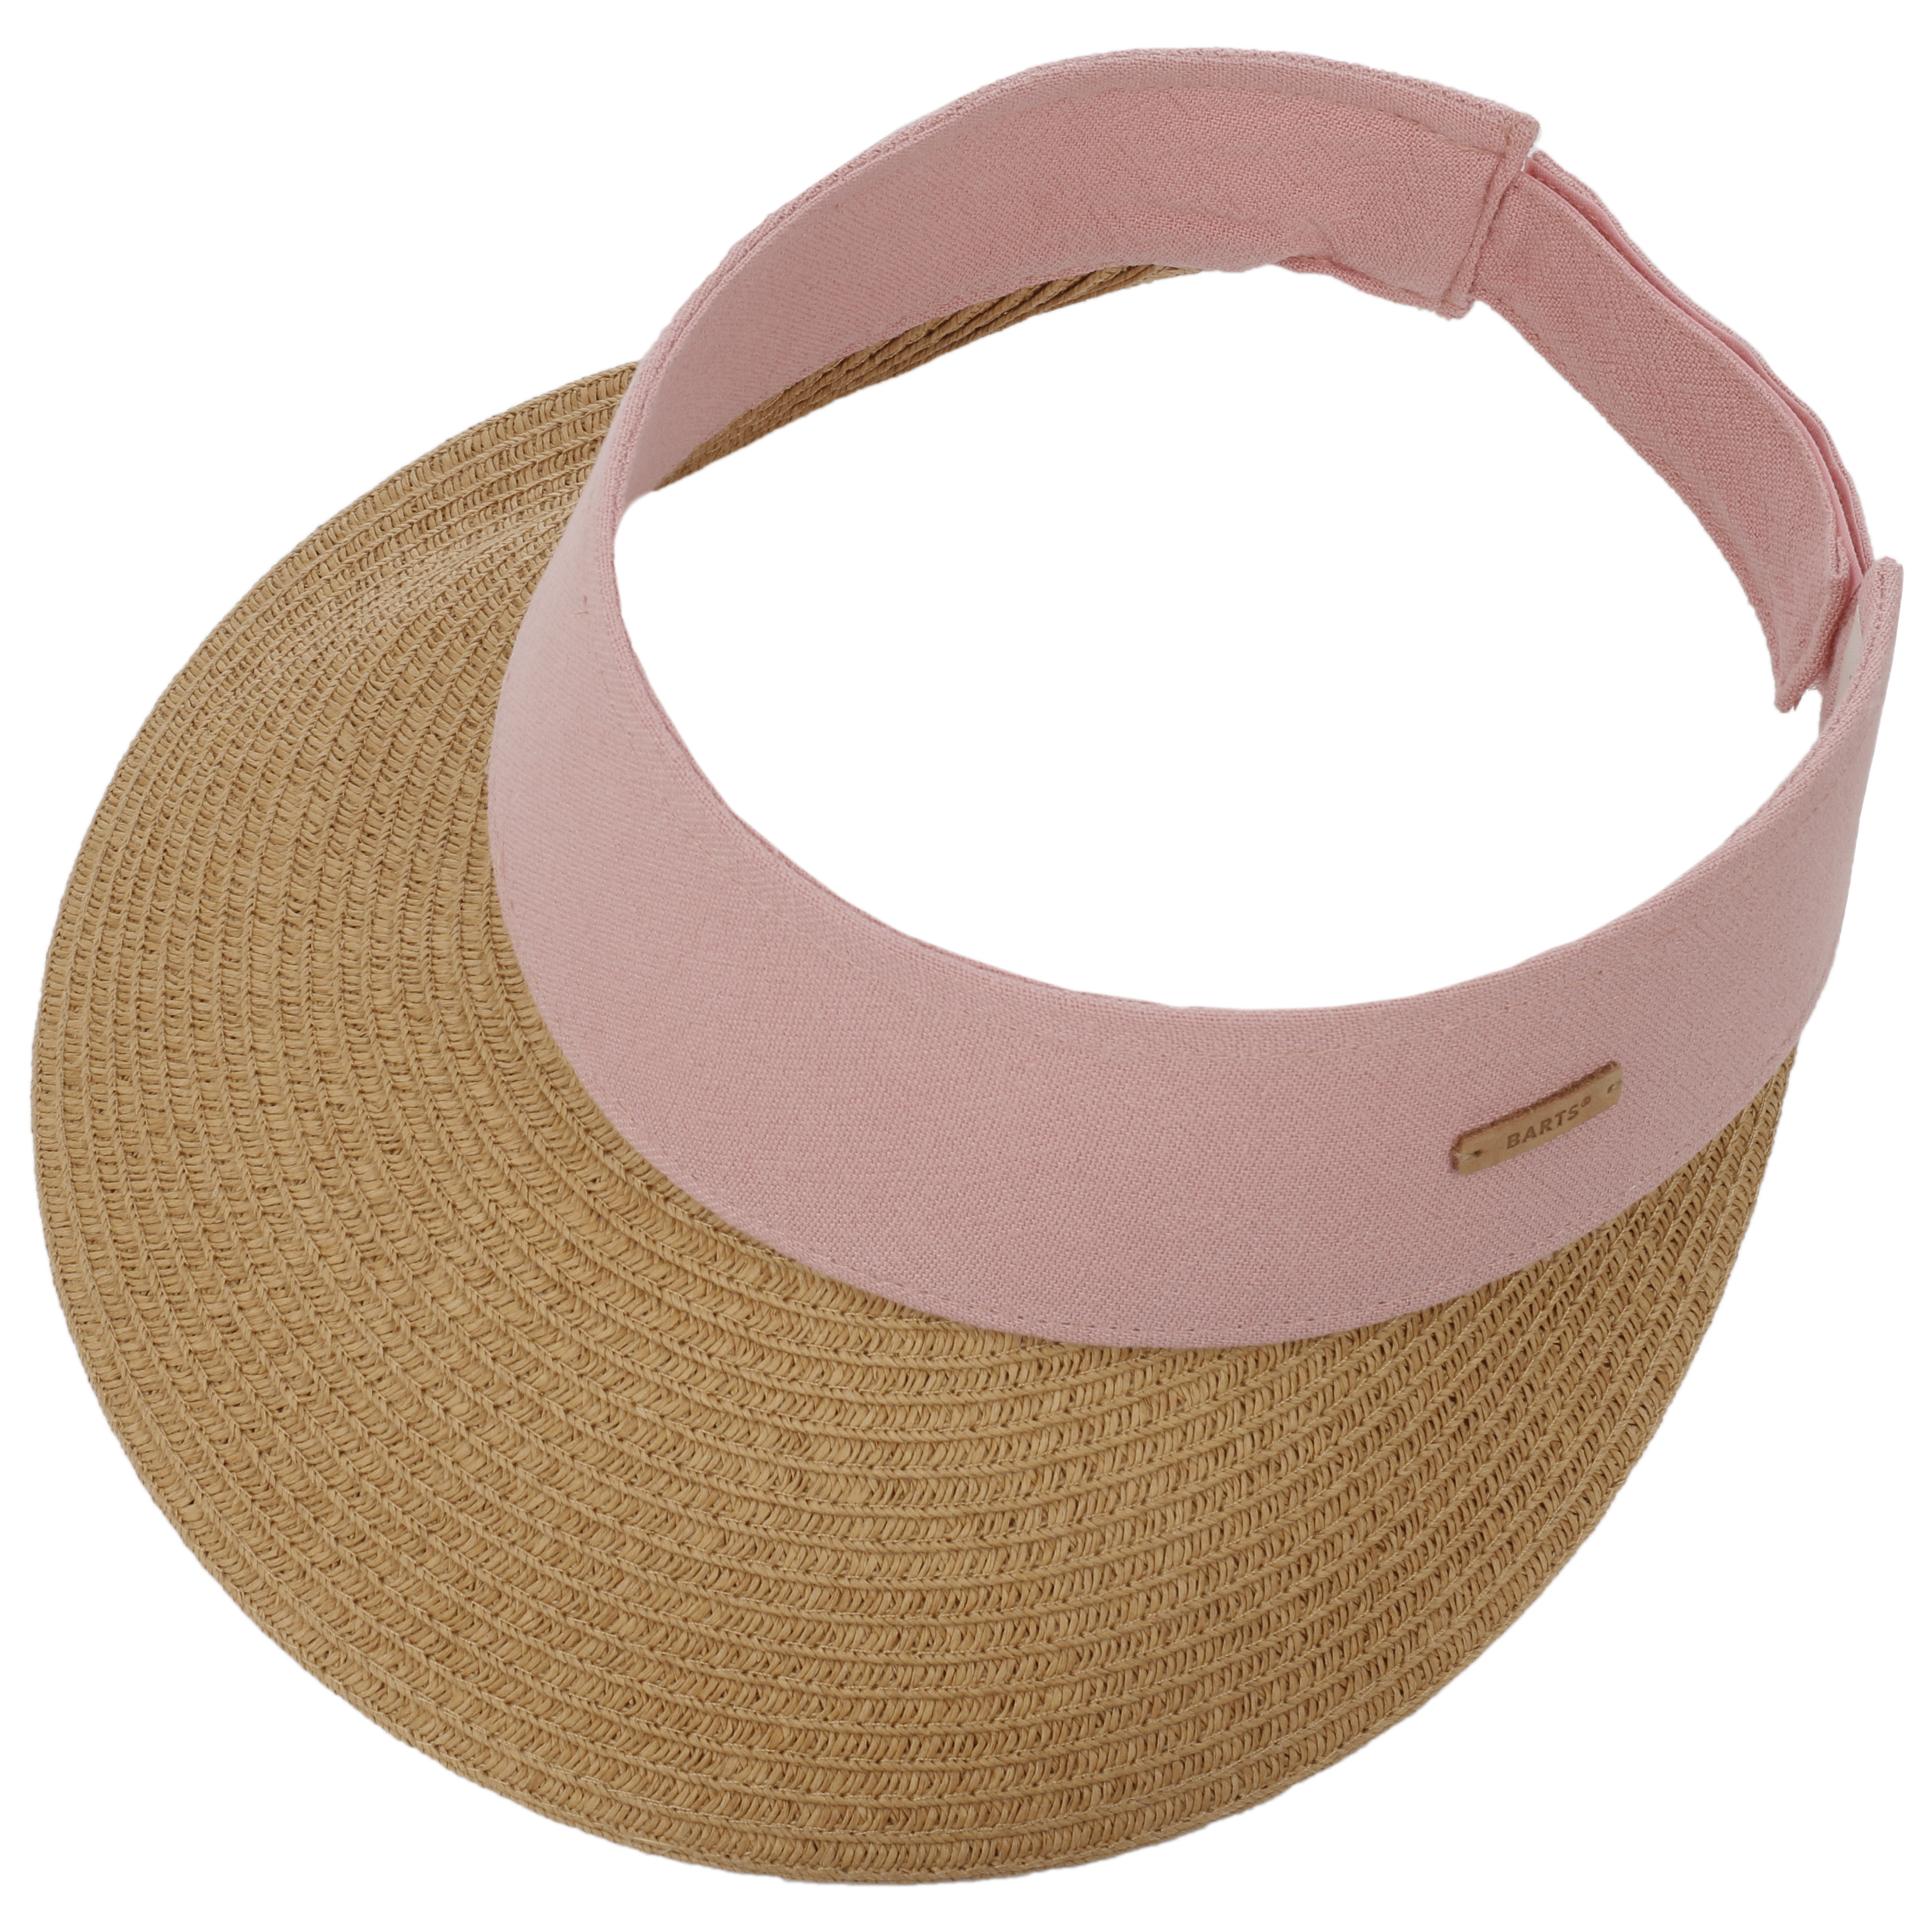 Accessories Hats & Caps Sun Hats & Visors Visors Small brown leather visor eye shade 